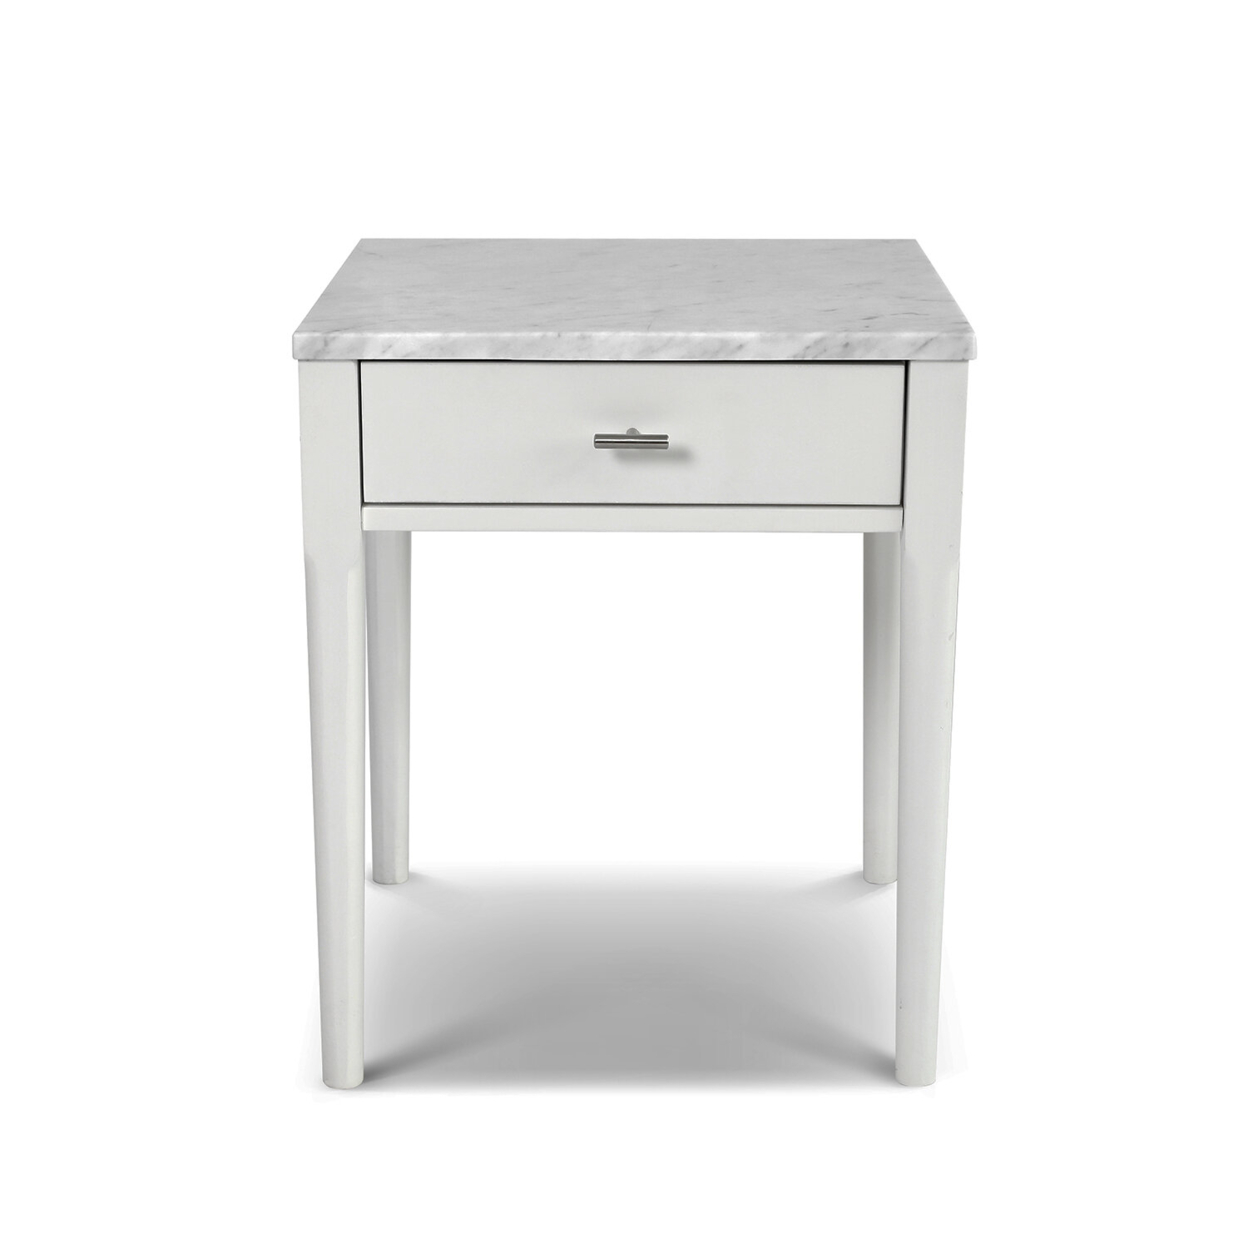 Alto 18" Square Italian Carrara White Marble Side Table with Legs - White